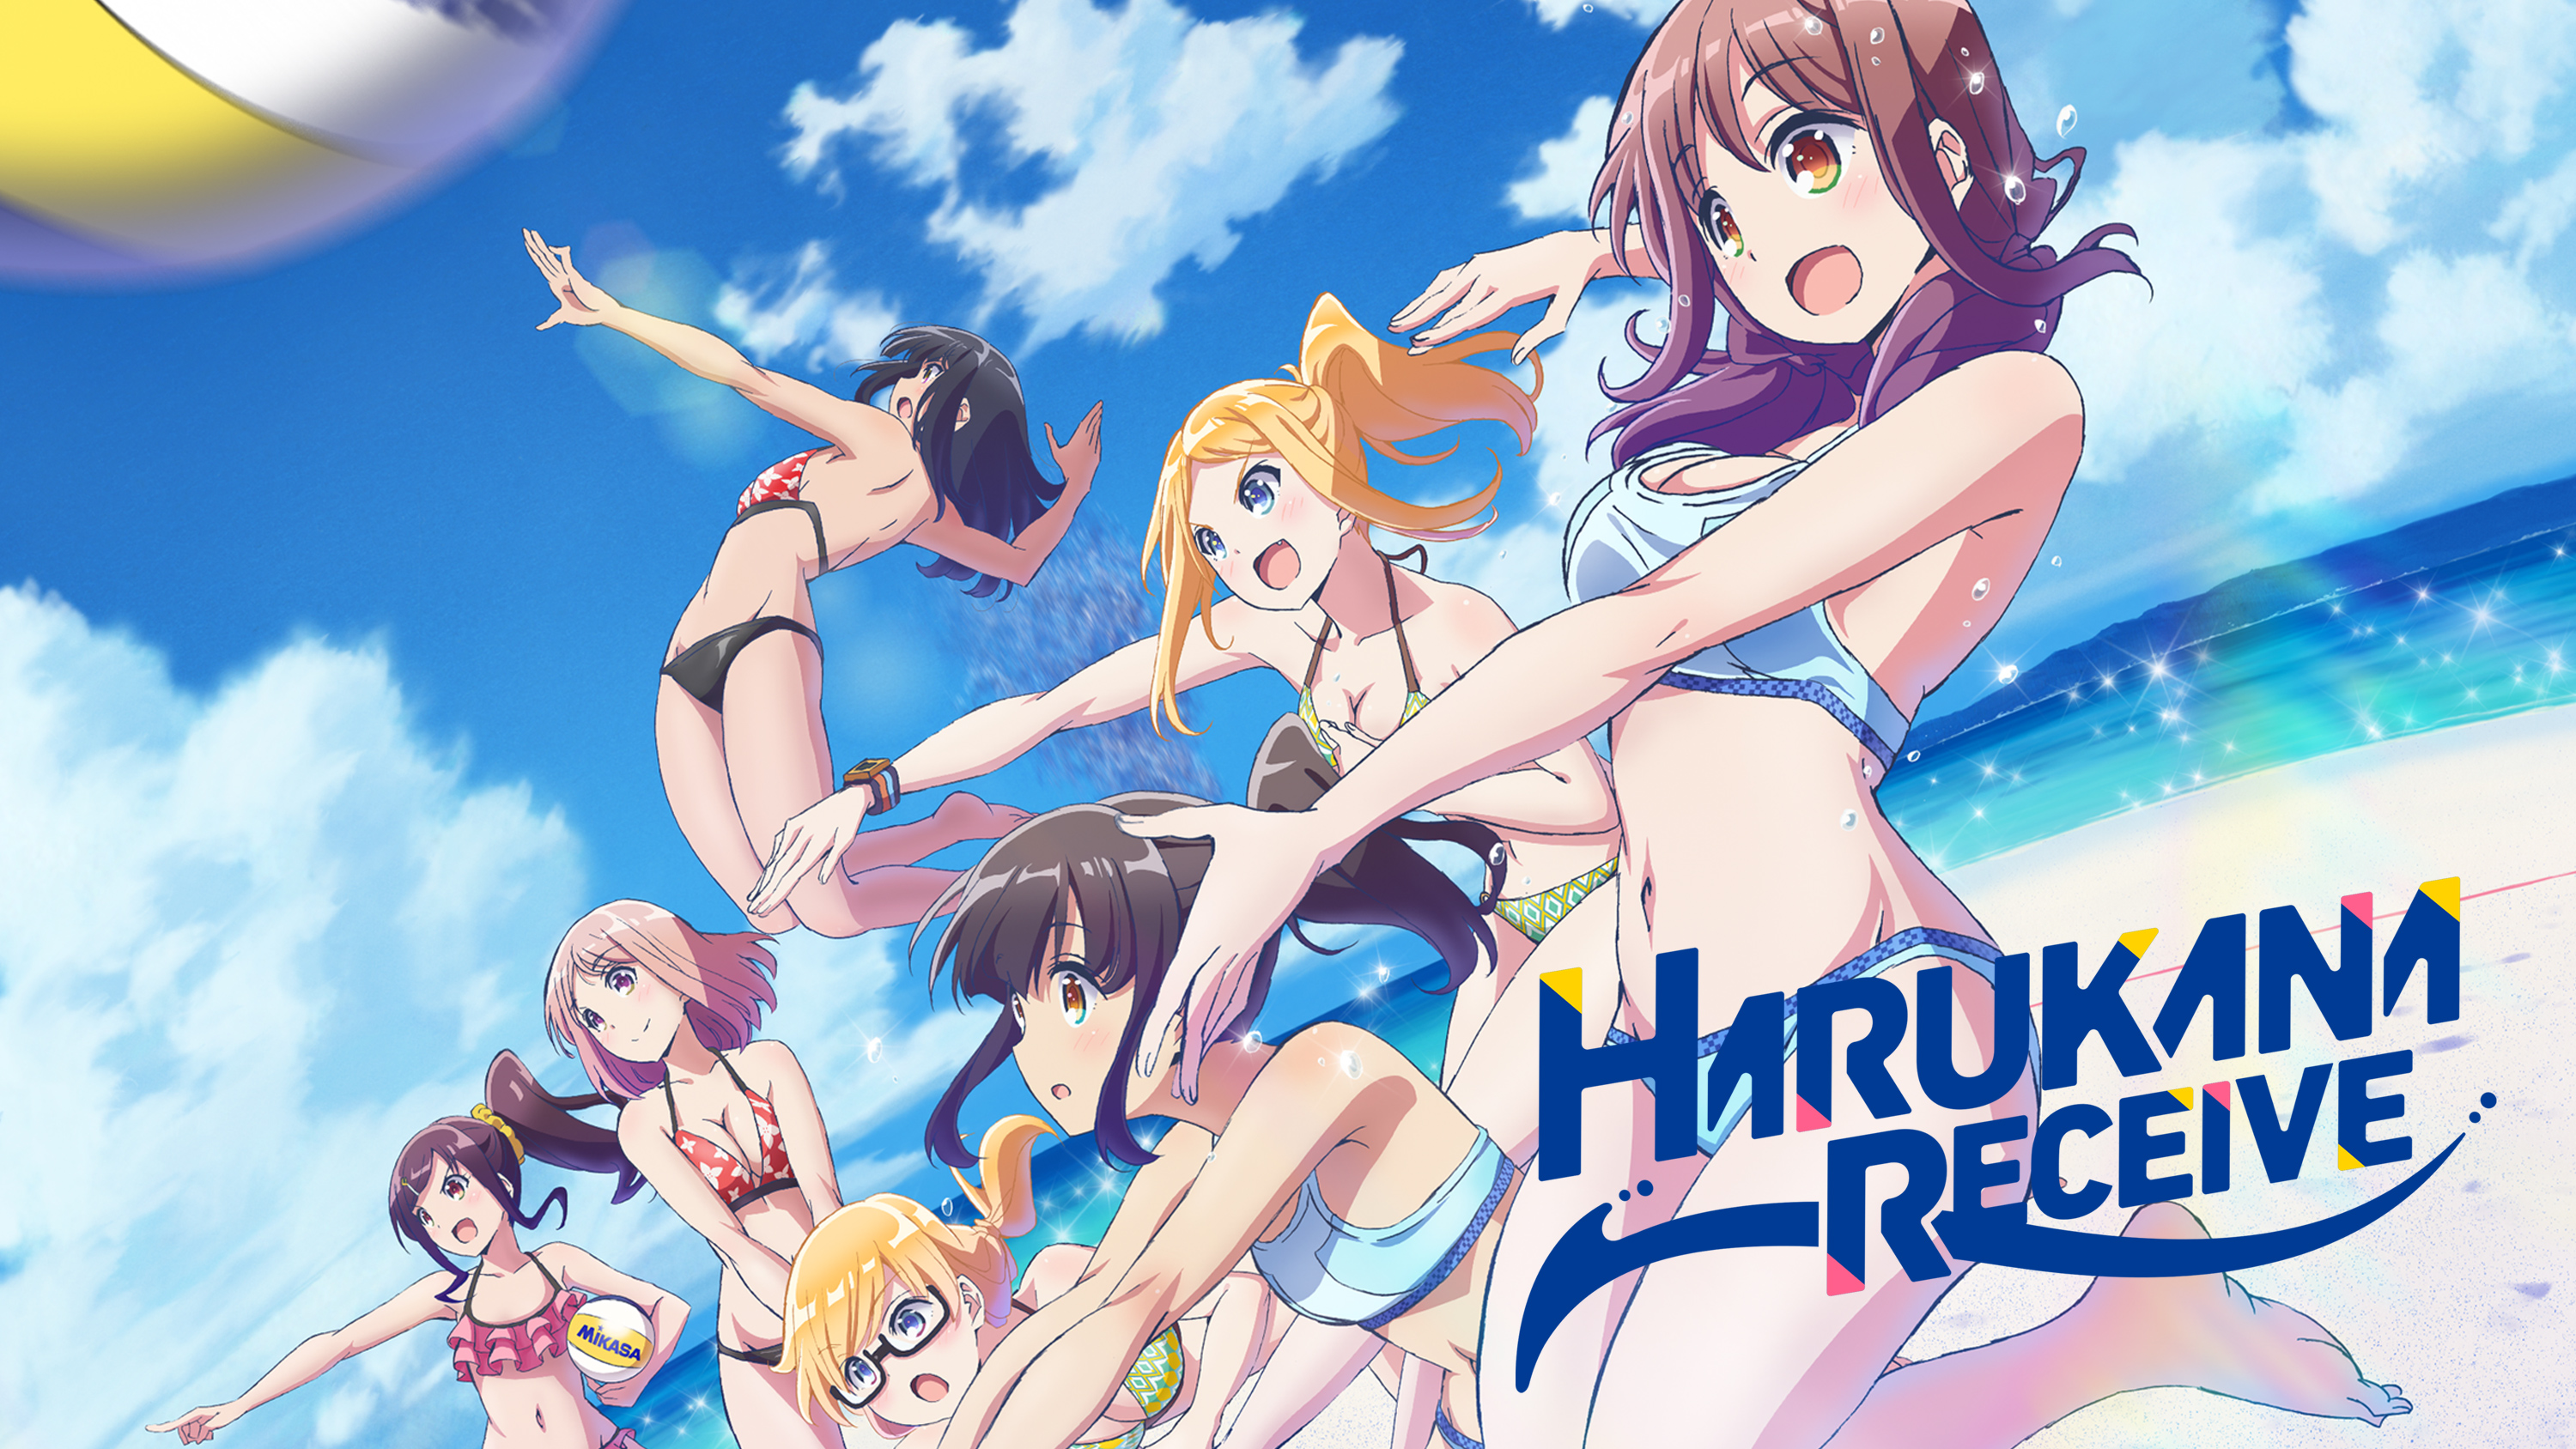 bikini, anime, harukana receive, beach, volleyball